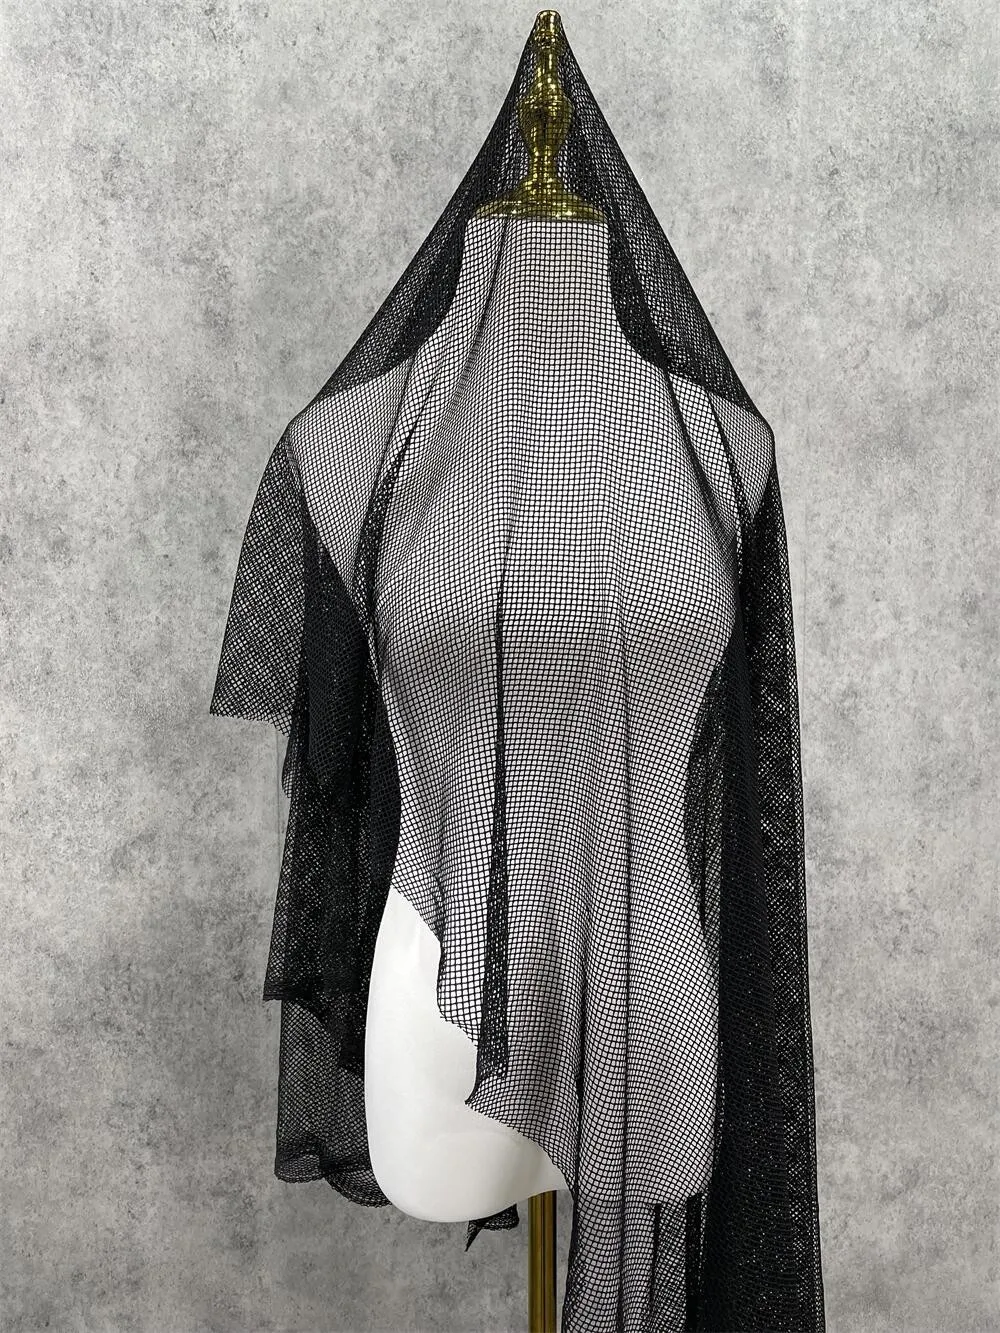 https://ae01.alicdn.com/kf/S02aa248f12204eabaacbaa541728cd97v/High-elastic-Black-Fishing-Net-Fabric-for-Clothing-Making-Dress-Sewing-Material-175cm-Wide-Sold-By.jpg